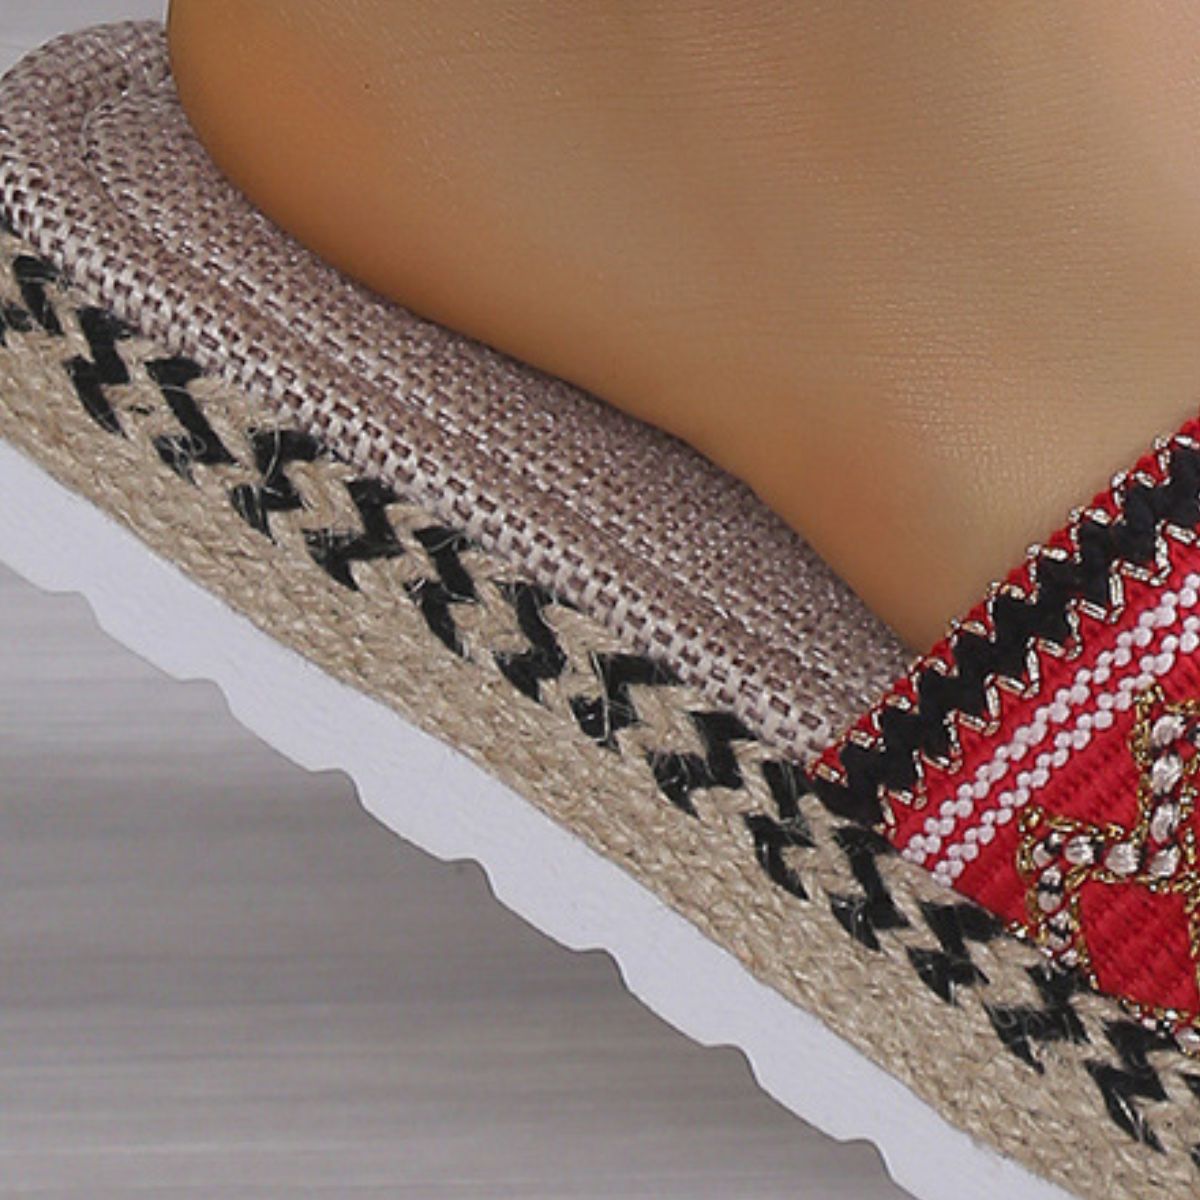 Open Toe Platform Sandals